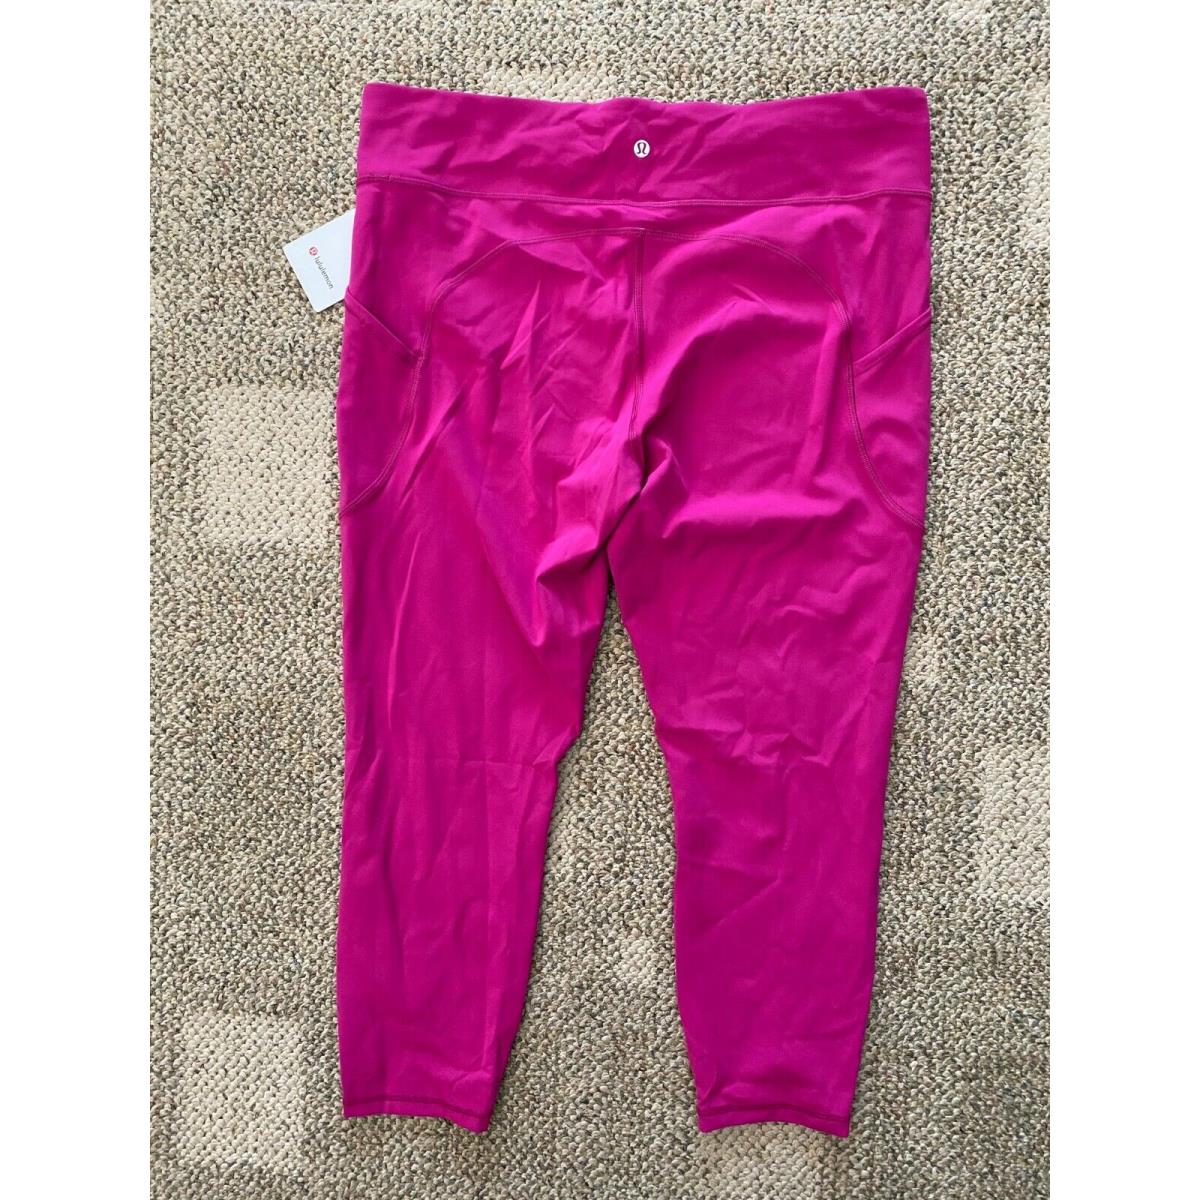 Lululemon clothing  - Raspberry Pink 1